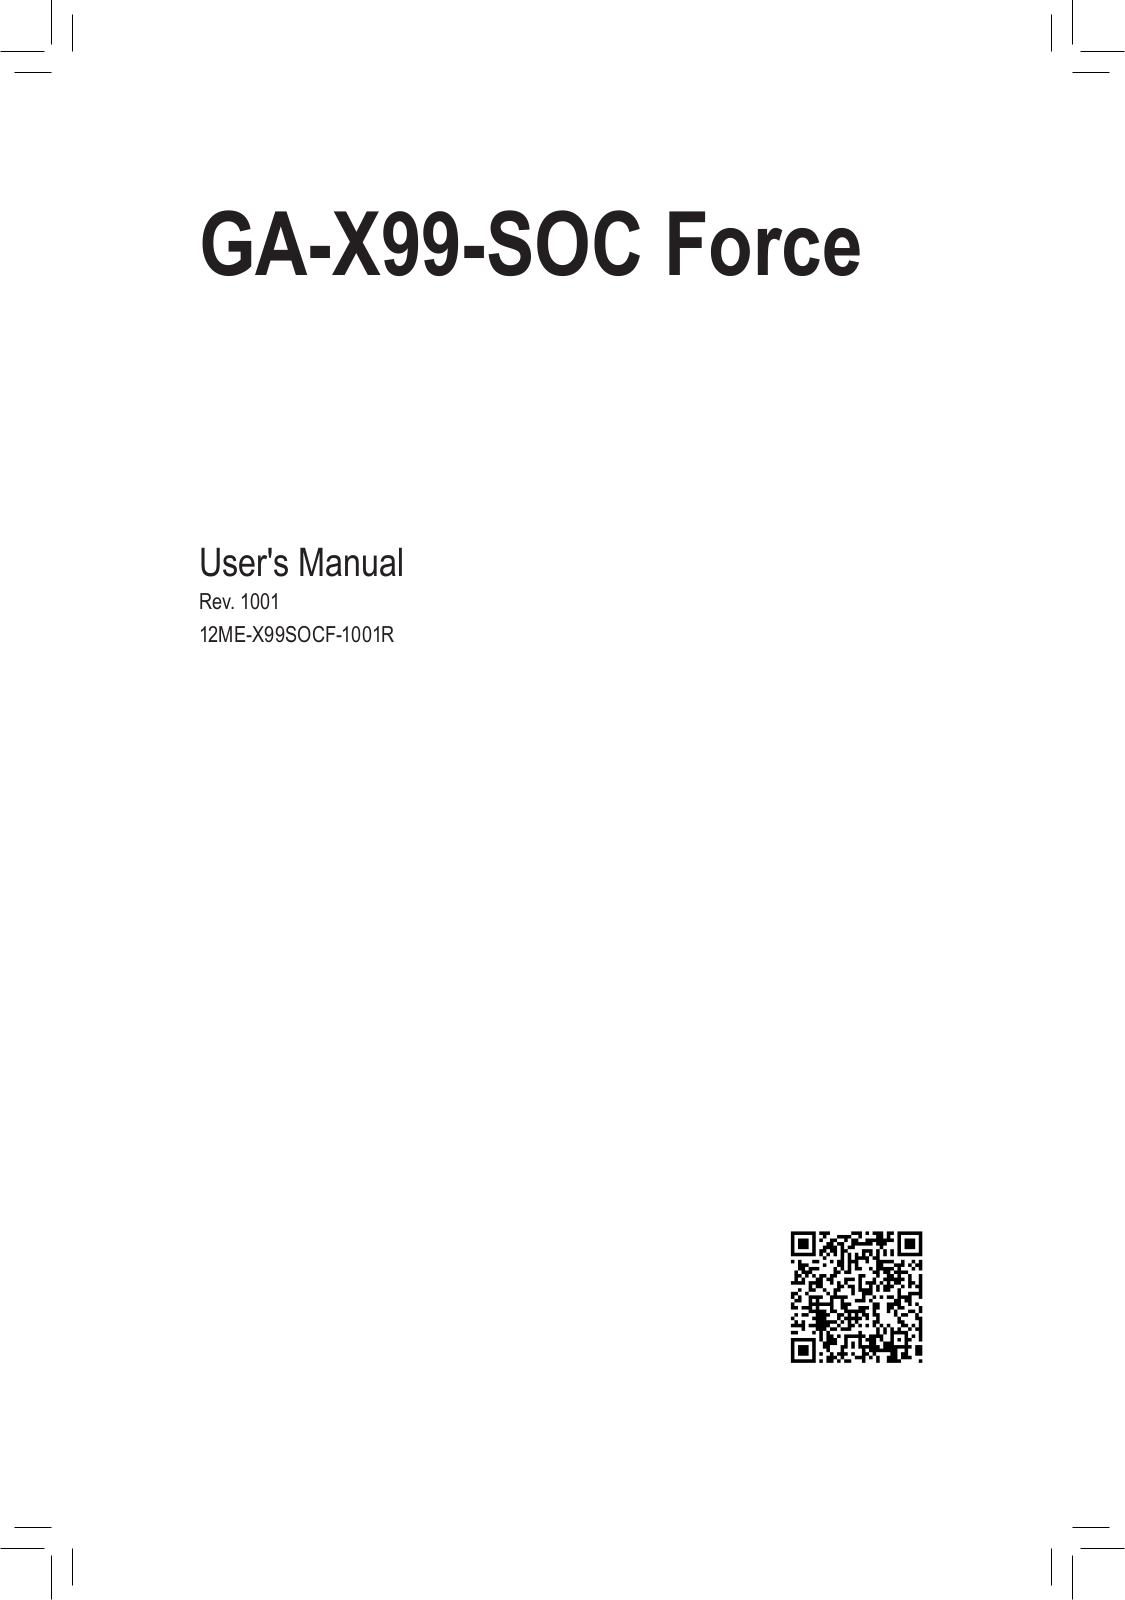 Gigabyte GA-X99-SOC FORCE User Manual